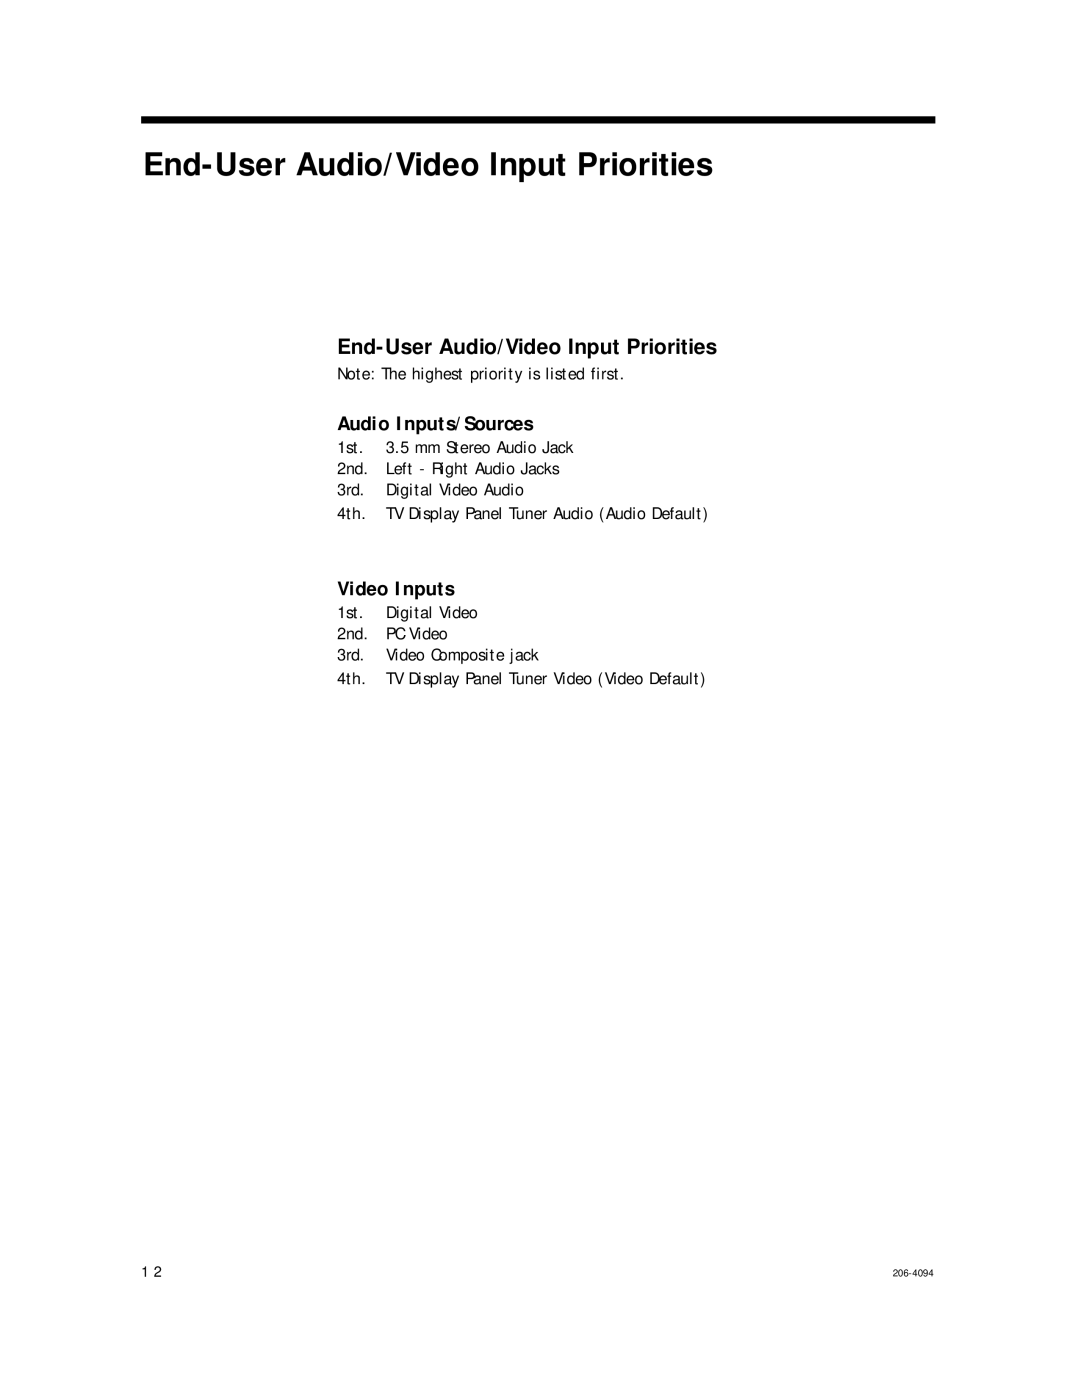 LG Electronics 202B, RJP-201B setup guide End-User Audio/Video Input Priorities Audio Inputs/Sources, Video Inputs 